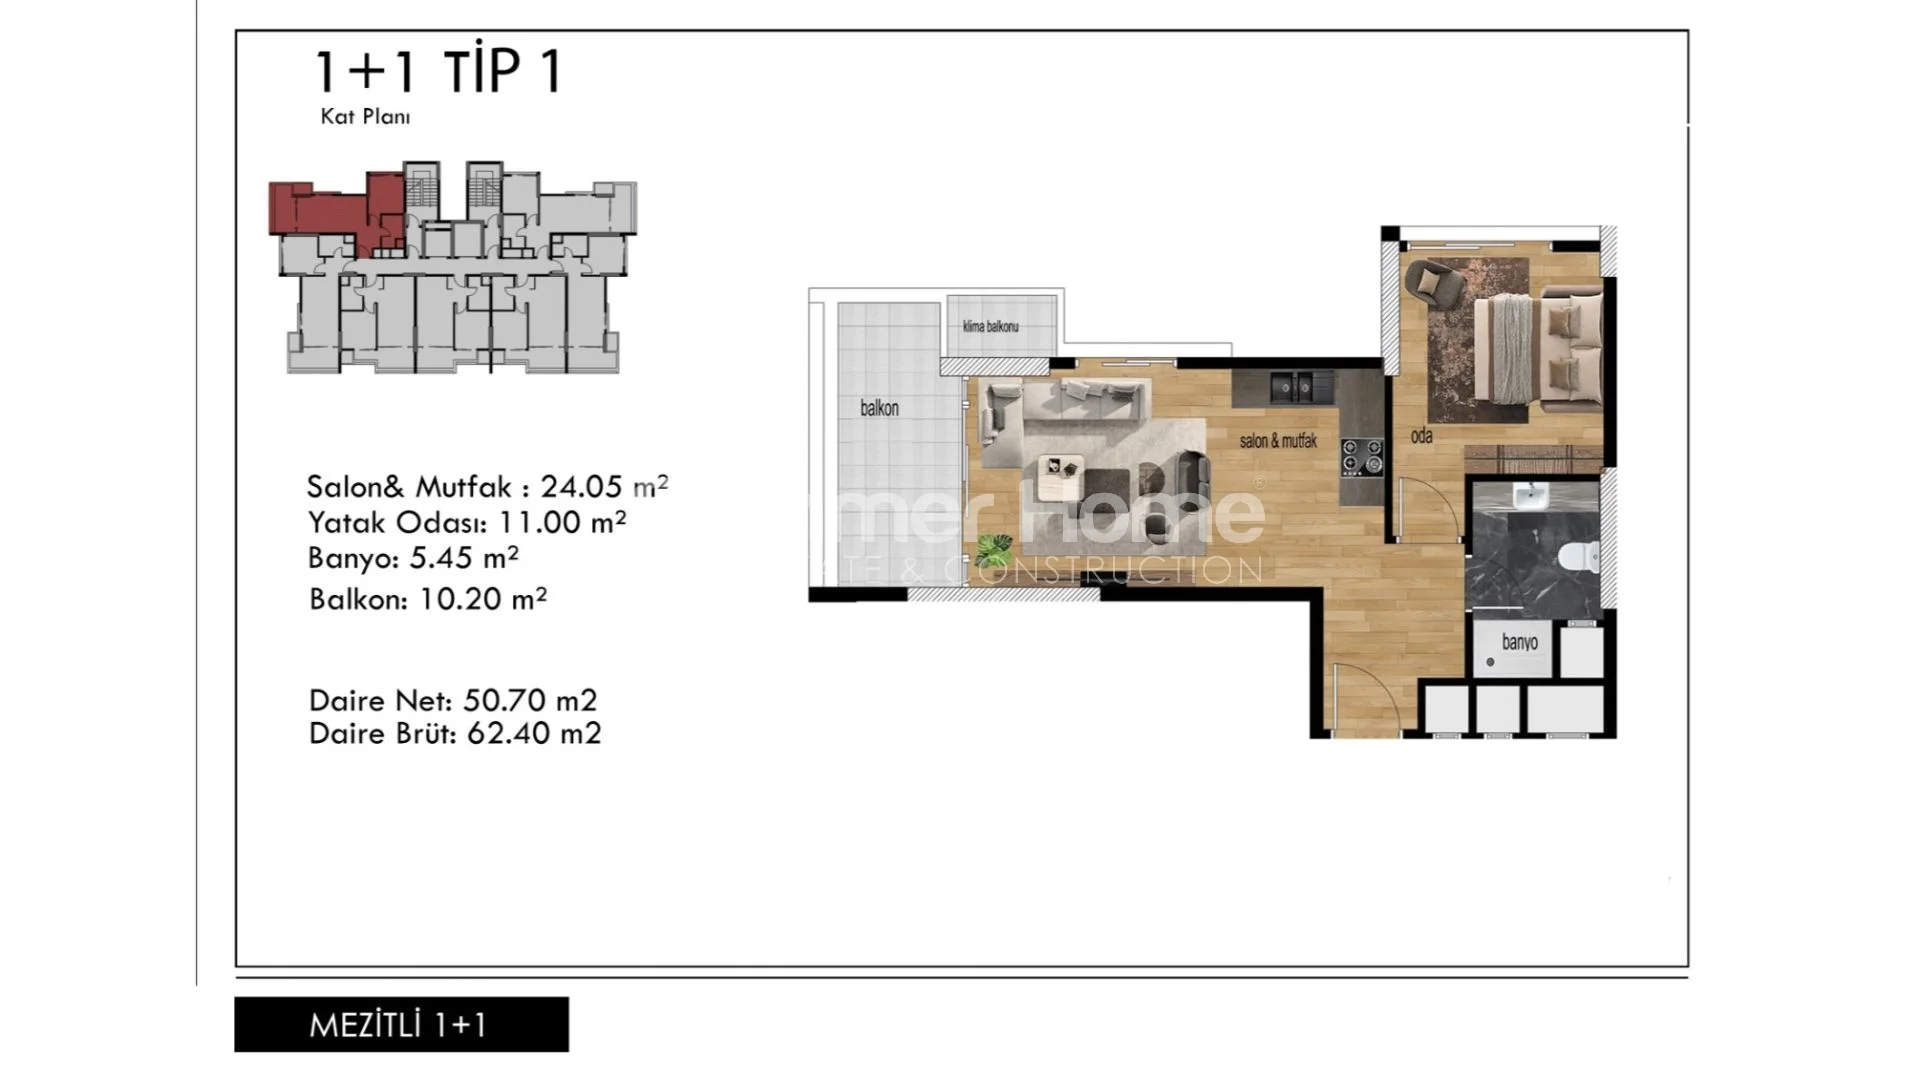 Neue wunderschöne moderne Apartments in Mezitli, Mersin Plan - 21